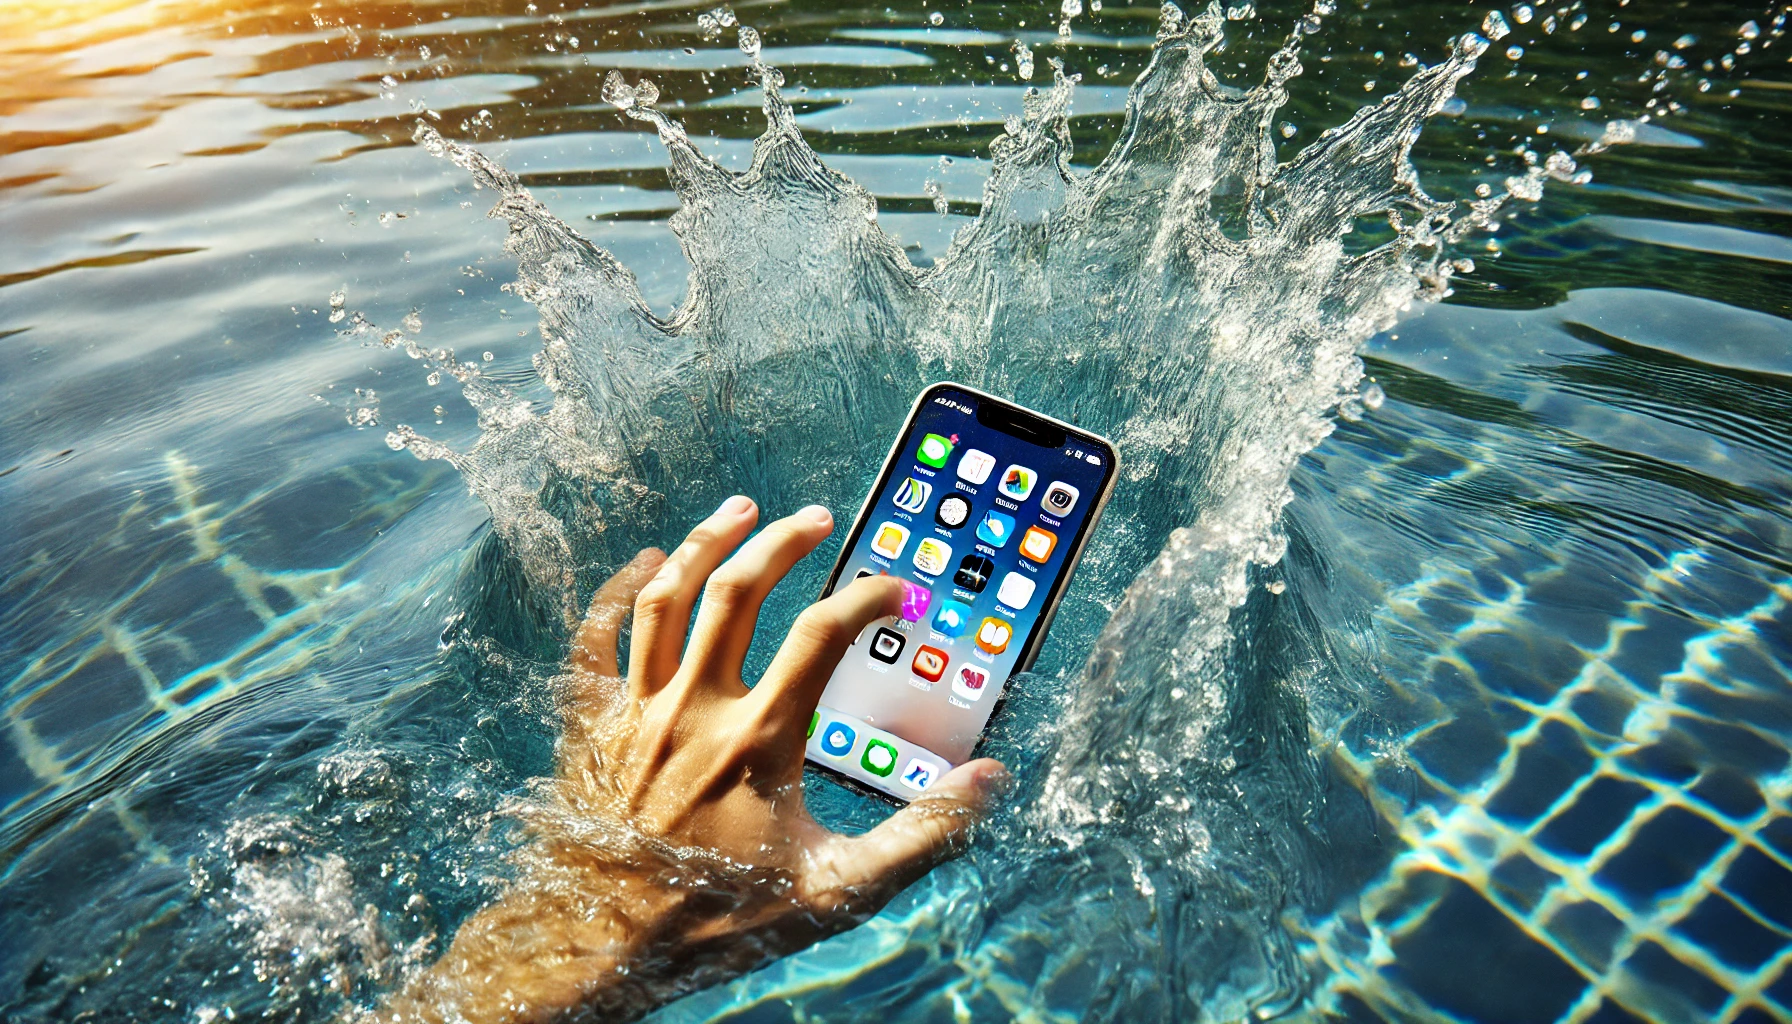 Sauver son smartphone tombé à l'eau - Dall-E